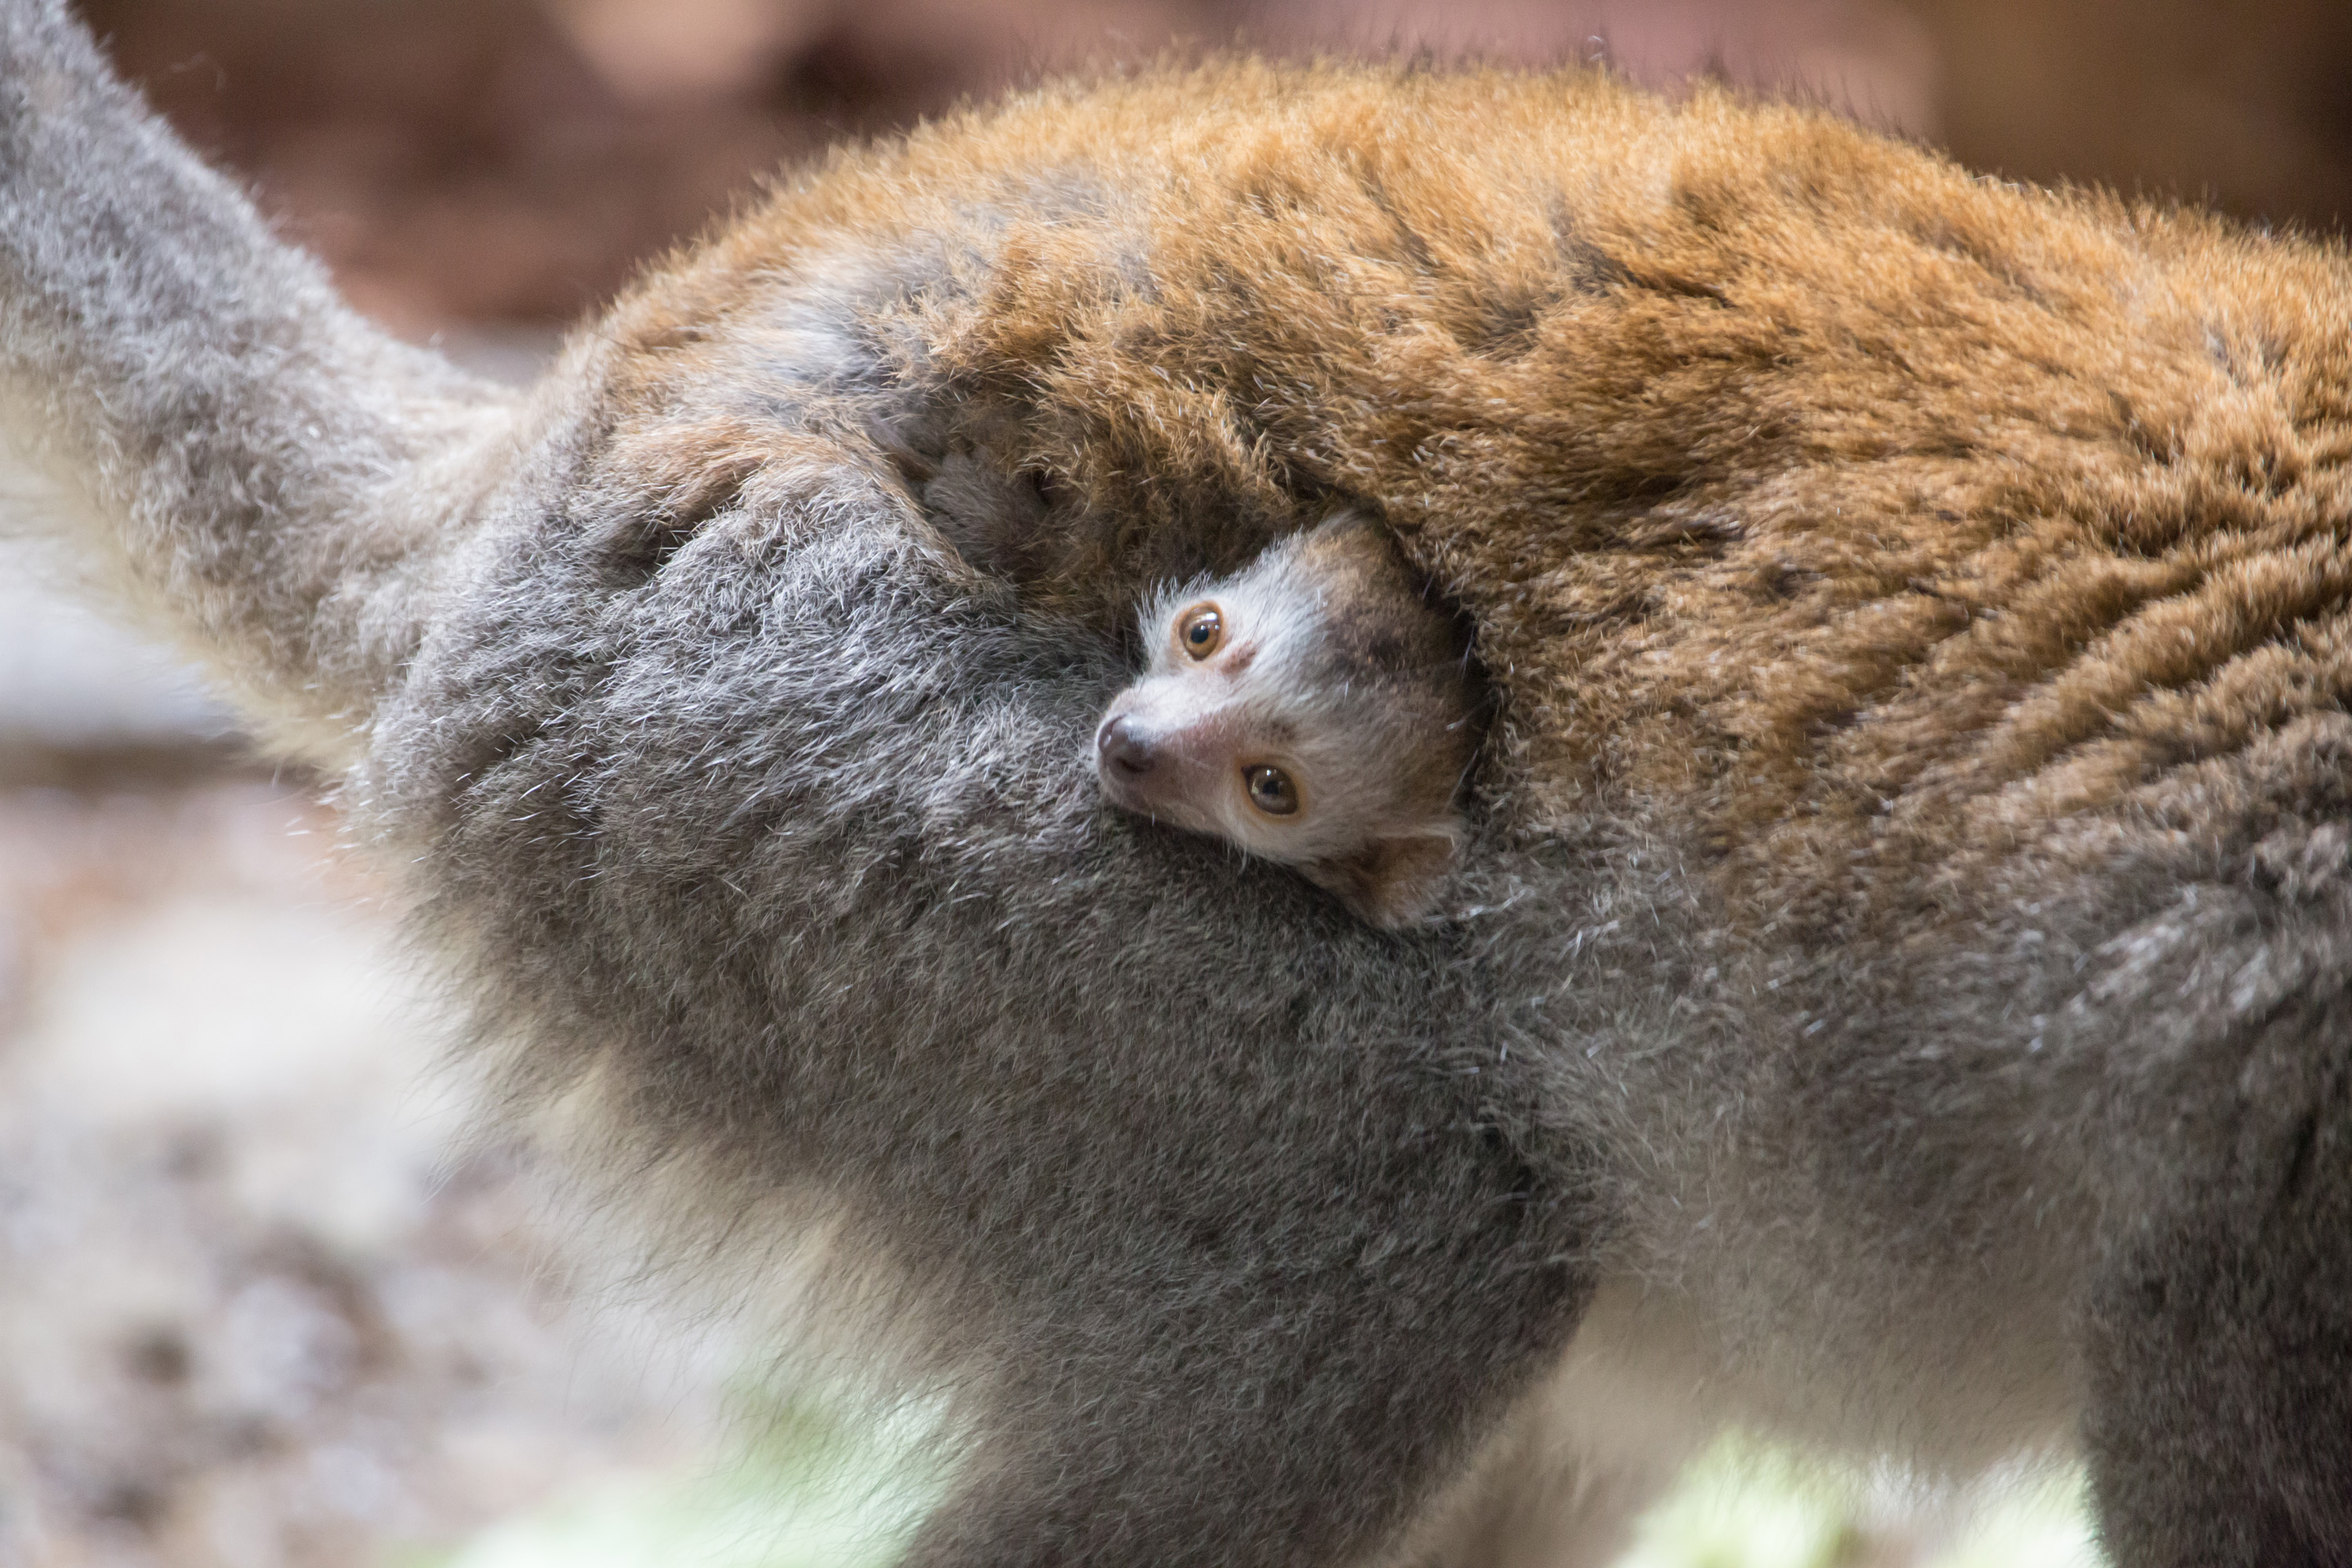 Crowned lemur photo